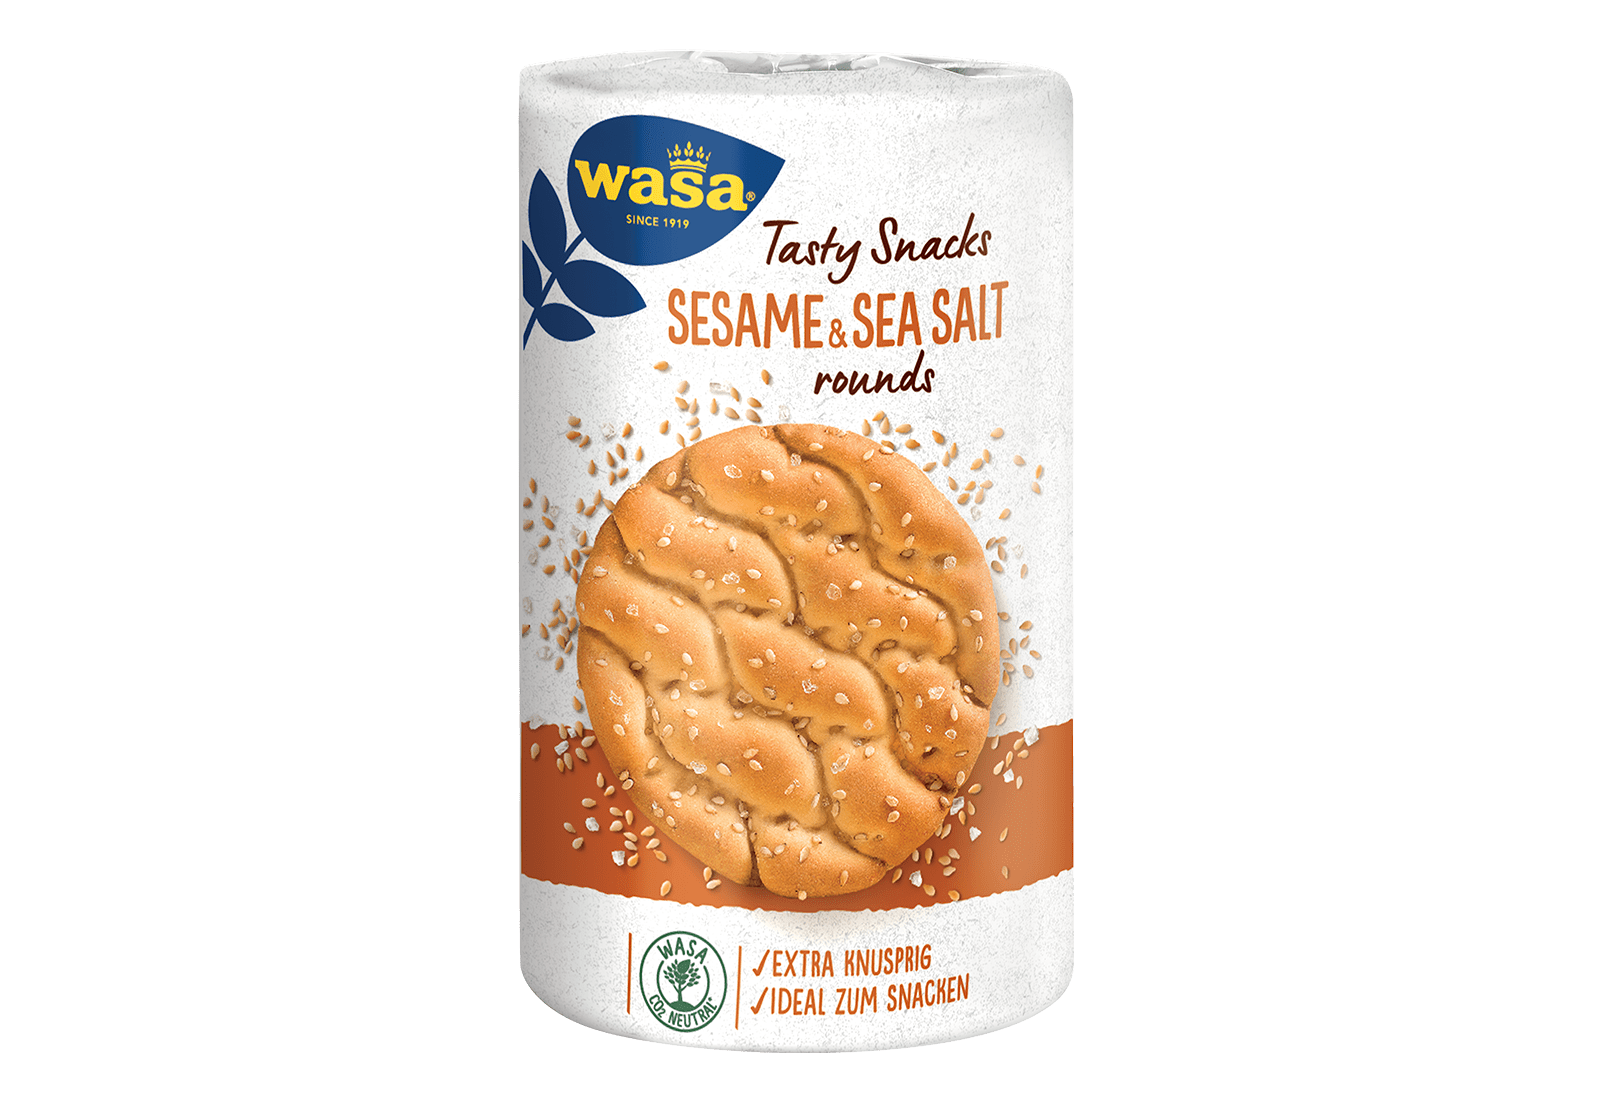 Tasty Snacks Sesame & Sea Salt Rounds